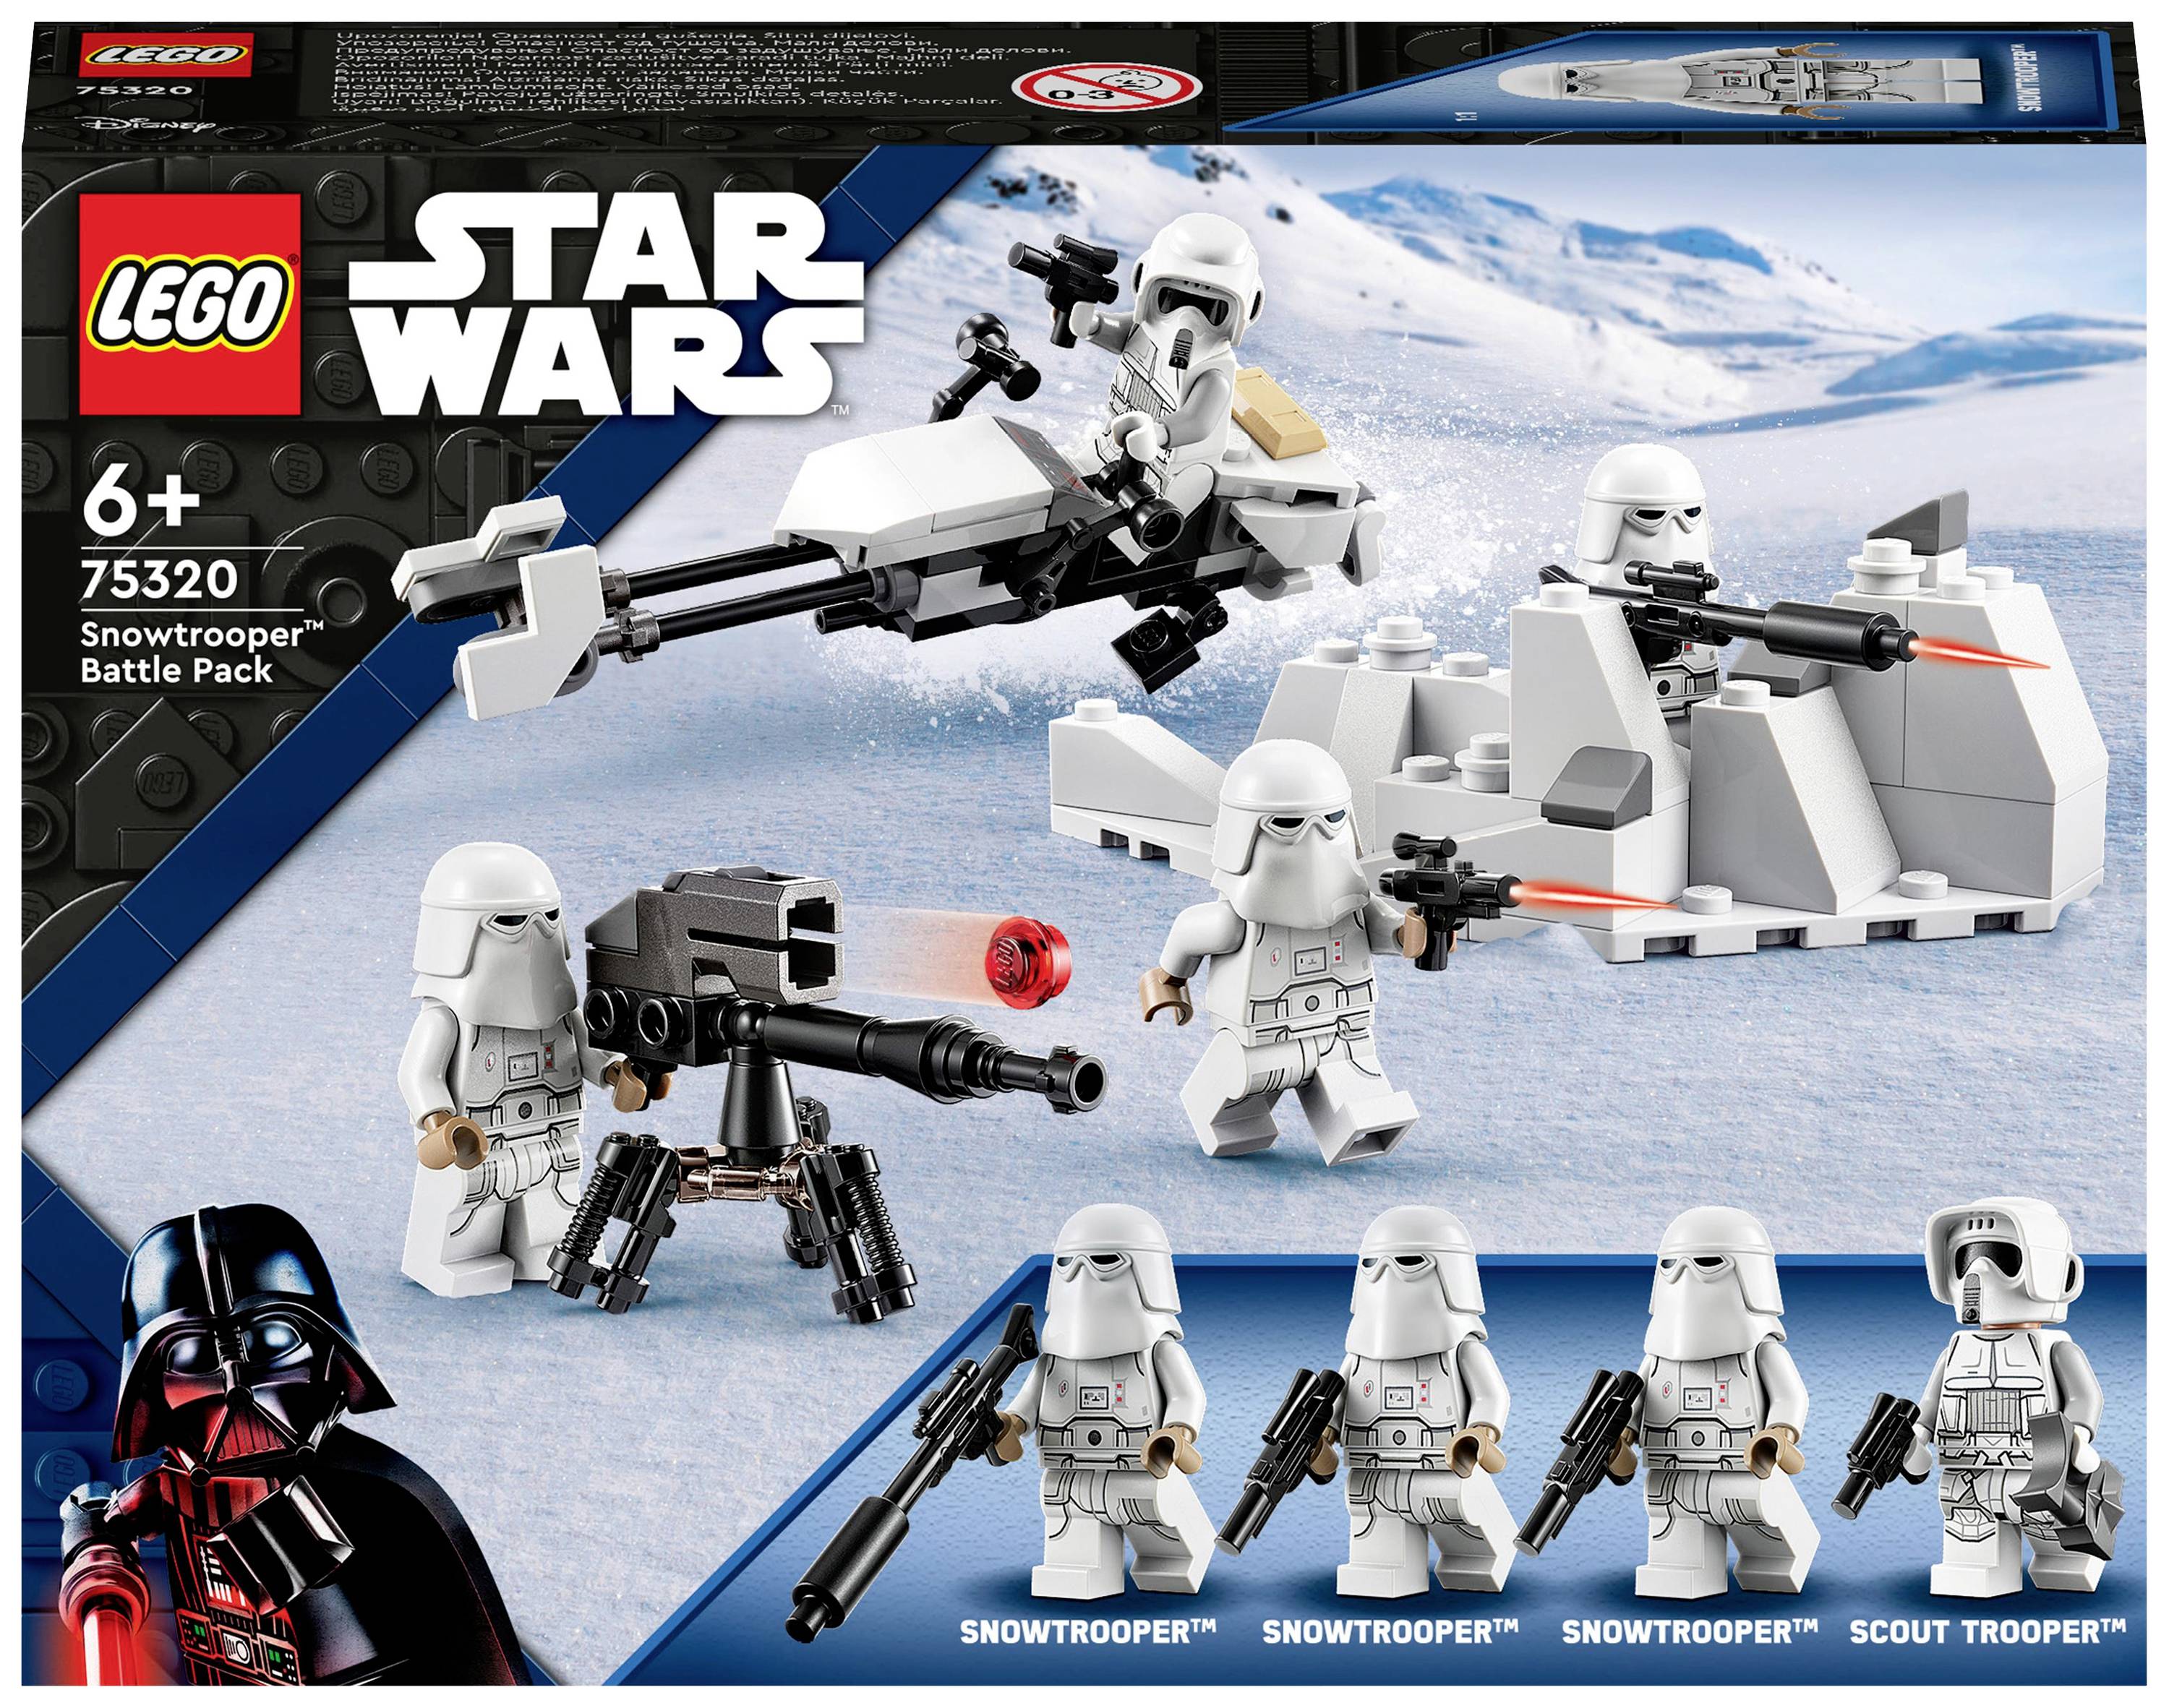 STAR WARS LEGO SNOWTROOPER BATTLE PACK 75320